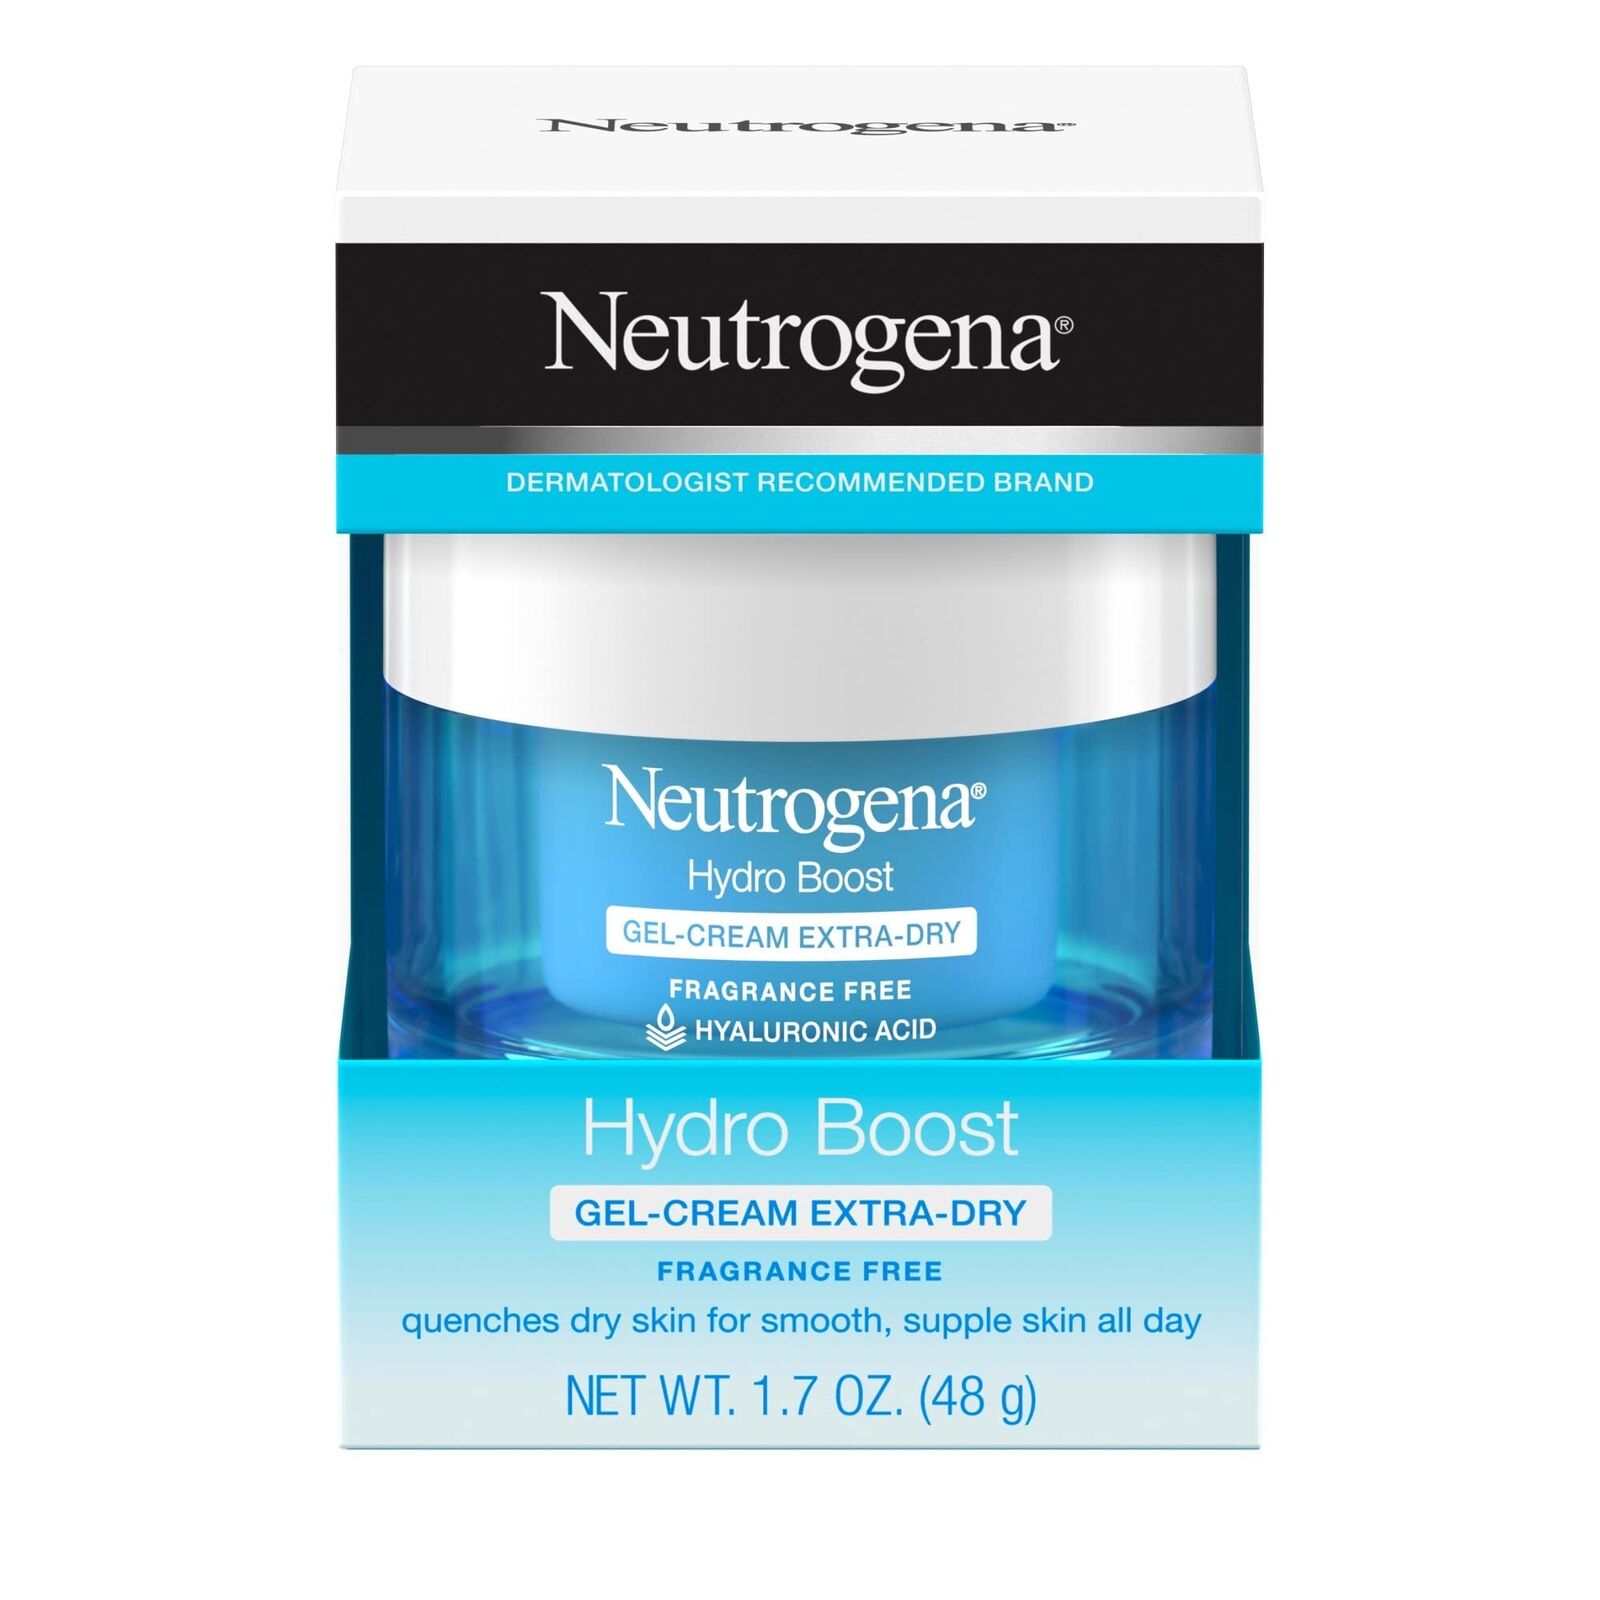 Neutrogena Hydro Boost for Extra Dry Skin Gel Cream